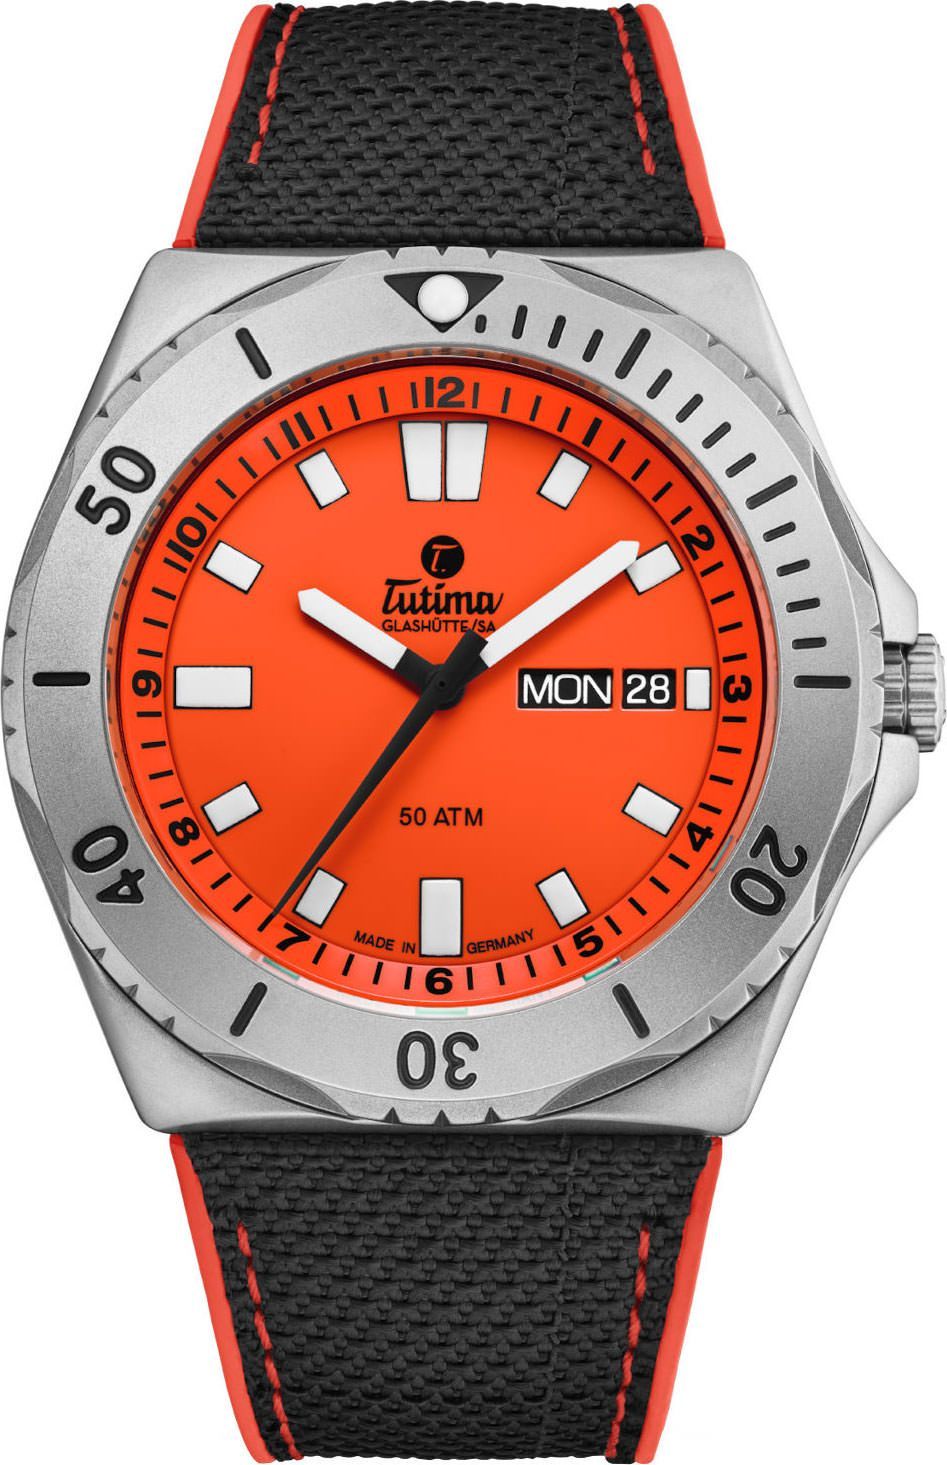 Tutima Glashütte Seven Seas 44 mm Watch in Orange Dial For Men - 1